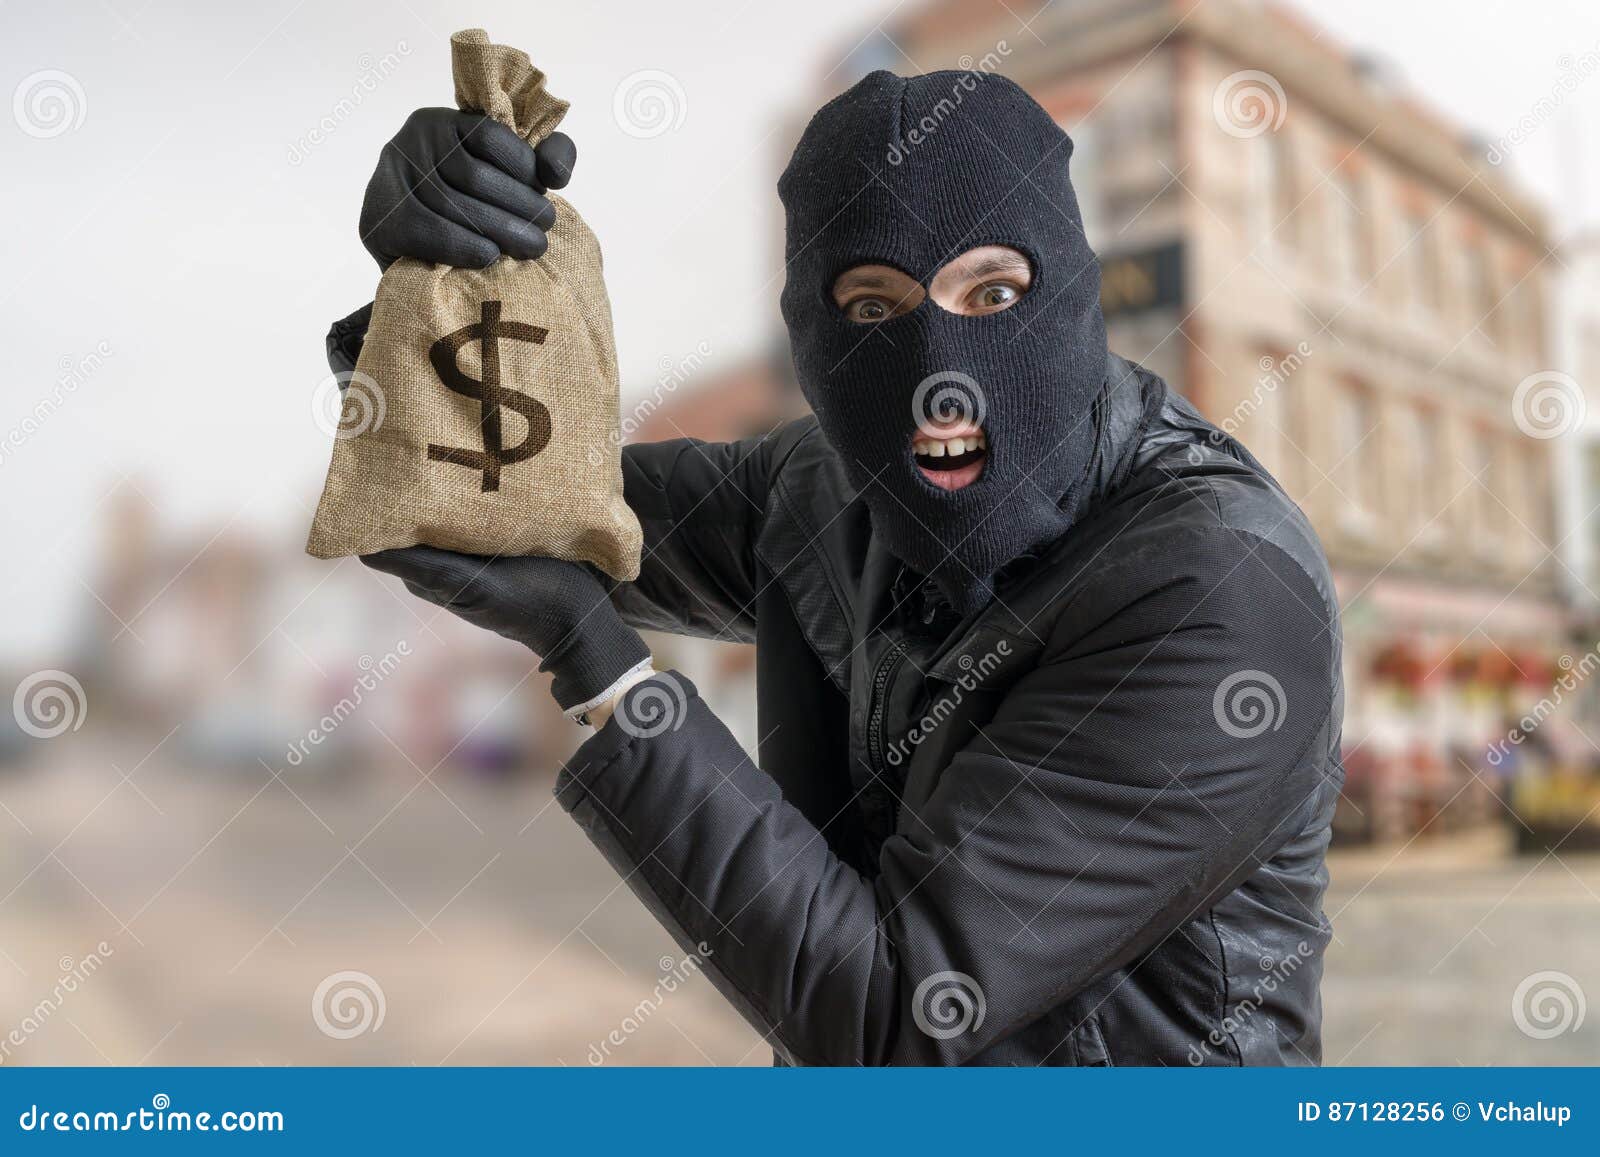 Jauncydev robber